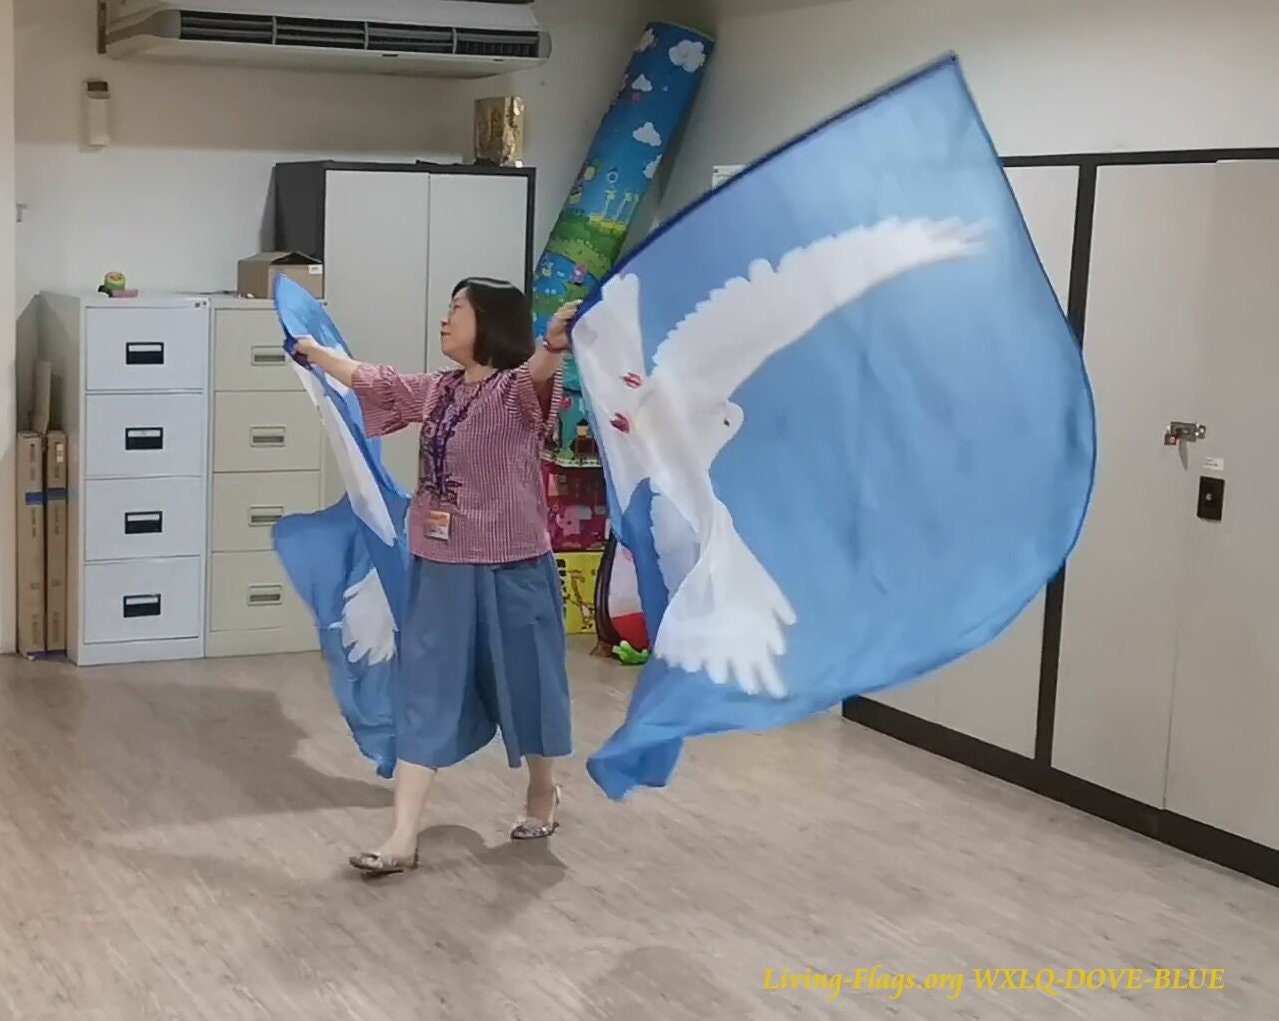 Compre 1 Obtenga 1 GRATIS - Paloma (Espíritu Santo) Azul Celestial - Estampado Habotai Silk Wing Flags Wxl-quill